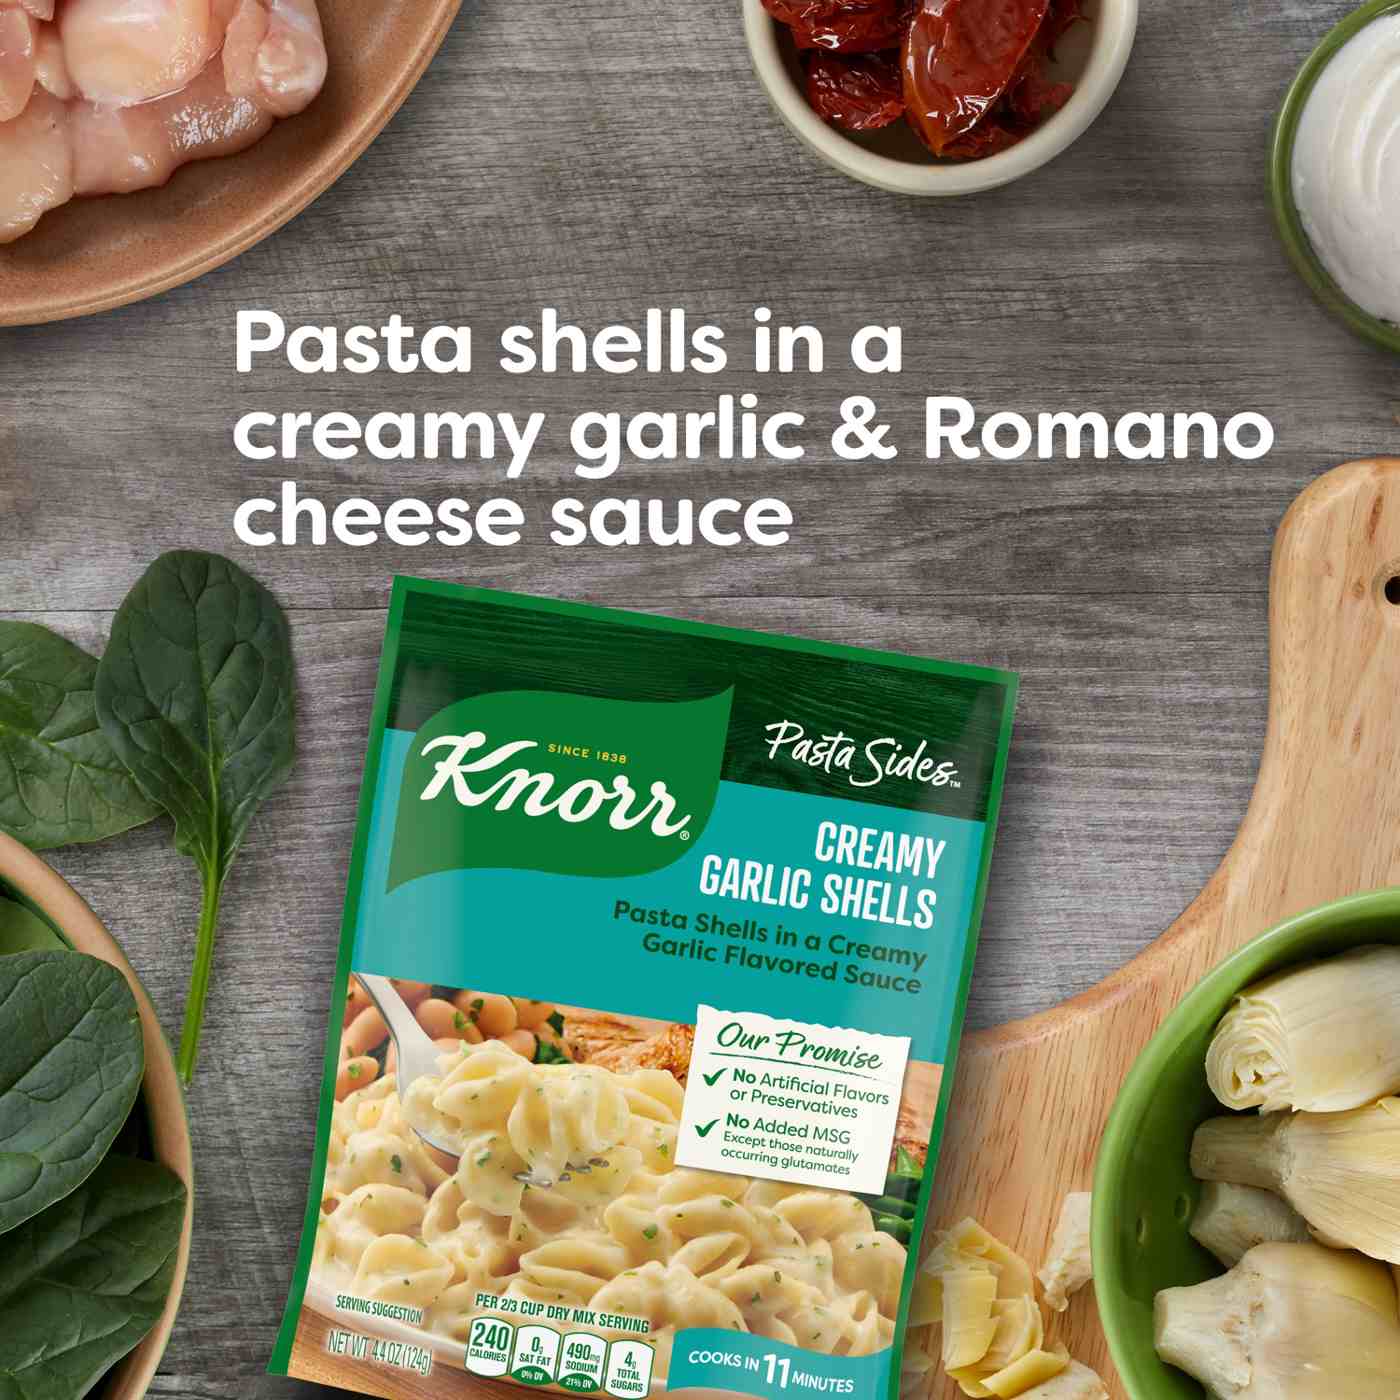 Knorr Pasta Sides Creamy Garlic Shells; image 6 of 8